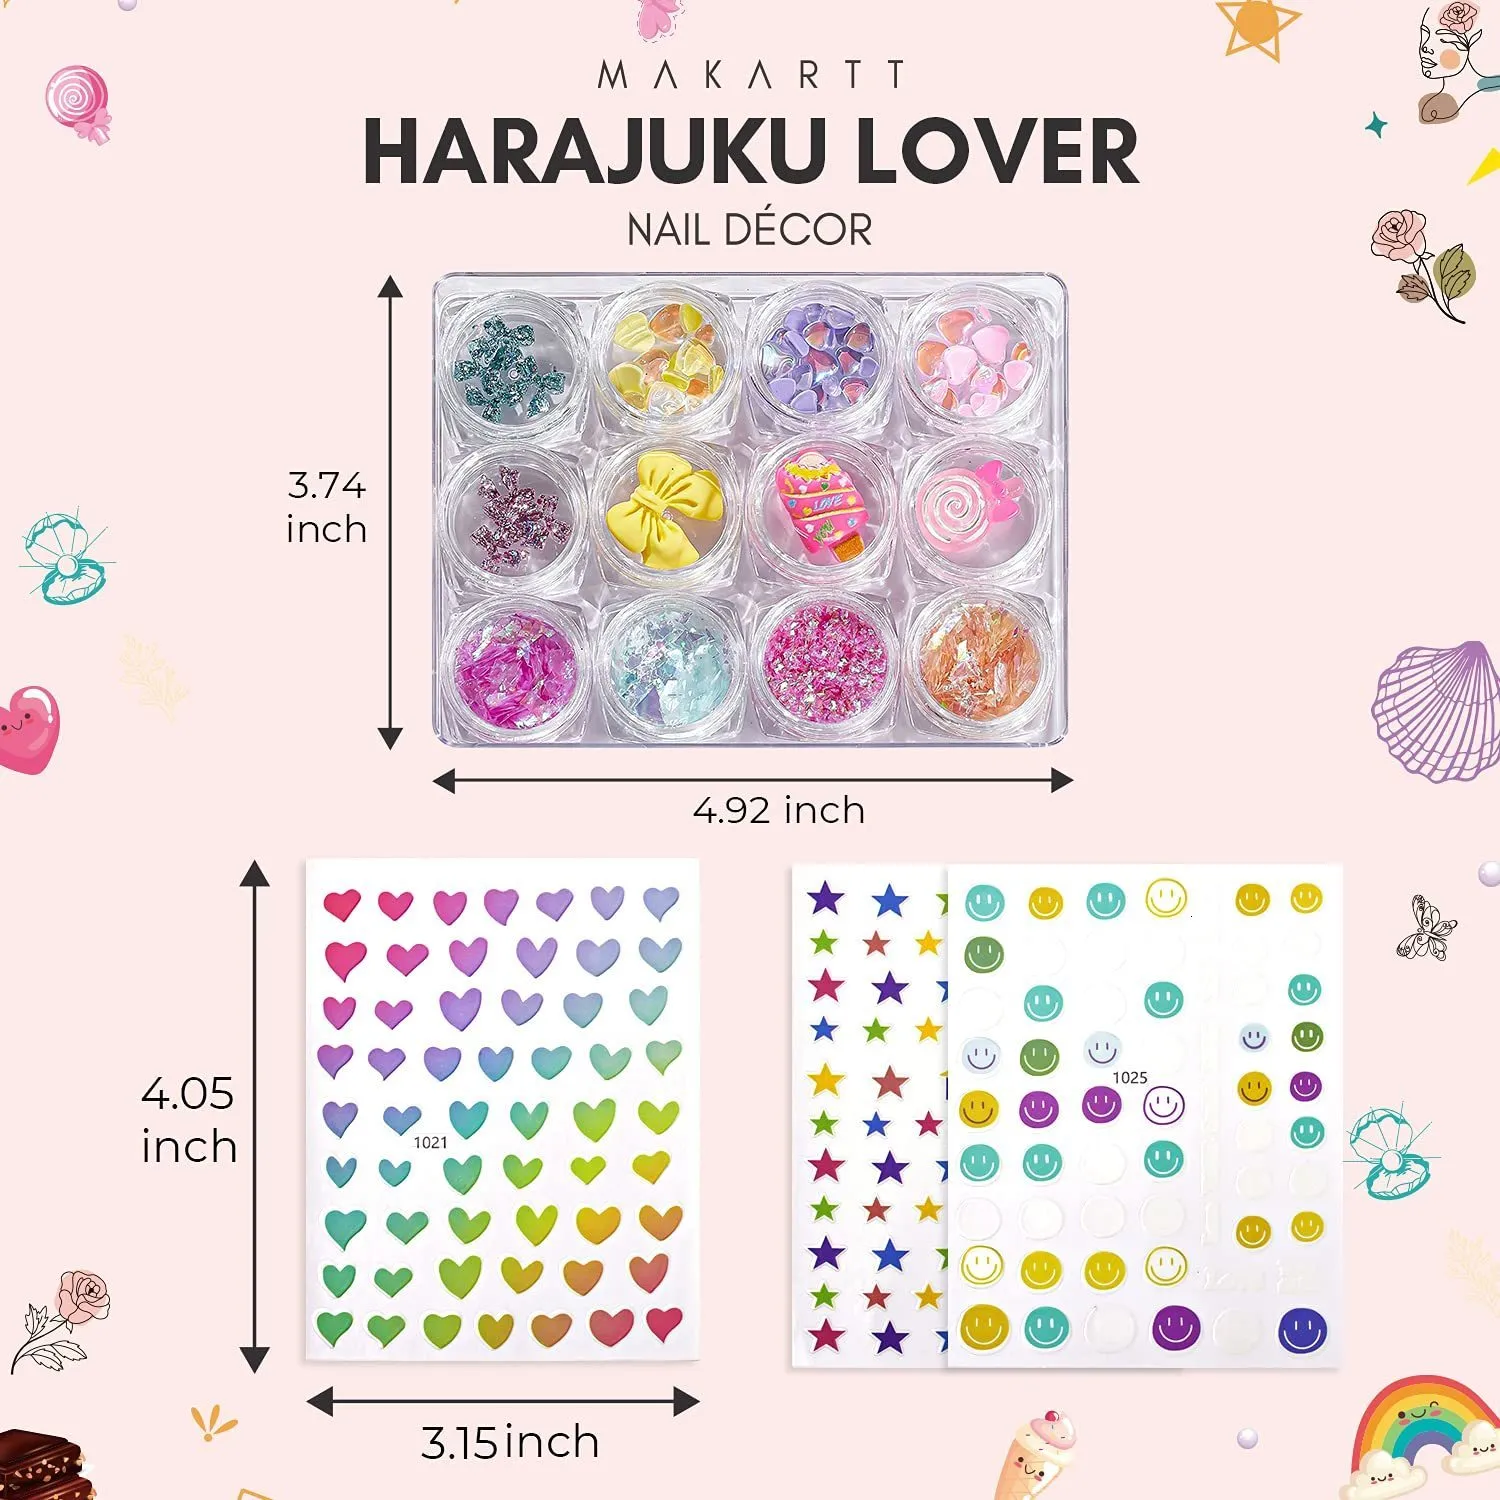 Harajuku Lover 12 Box Nail Art Decor Set With Sequins, Glitters, And 3  Sheets Of Stickers DIY Unicorn Nail Art Set 230706 From Zhong06, $14.49